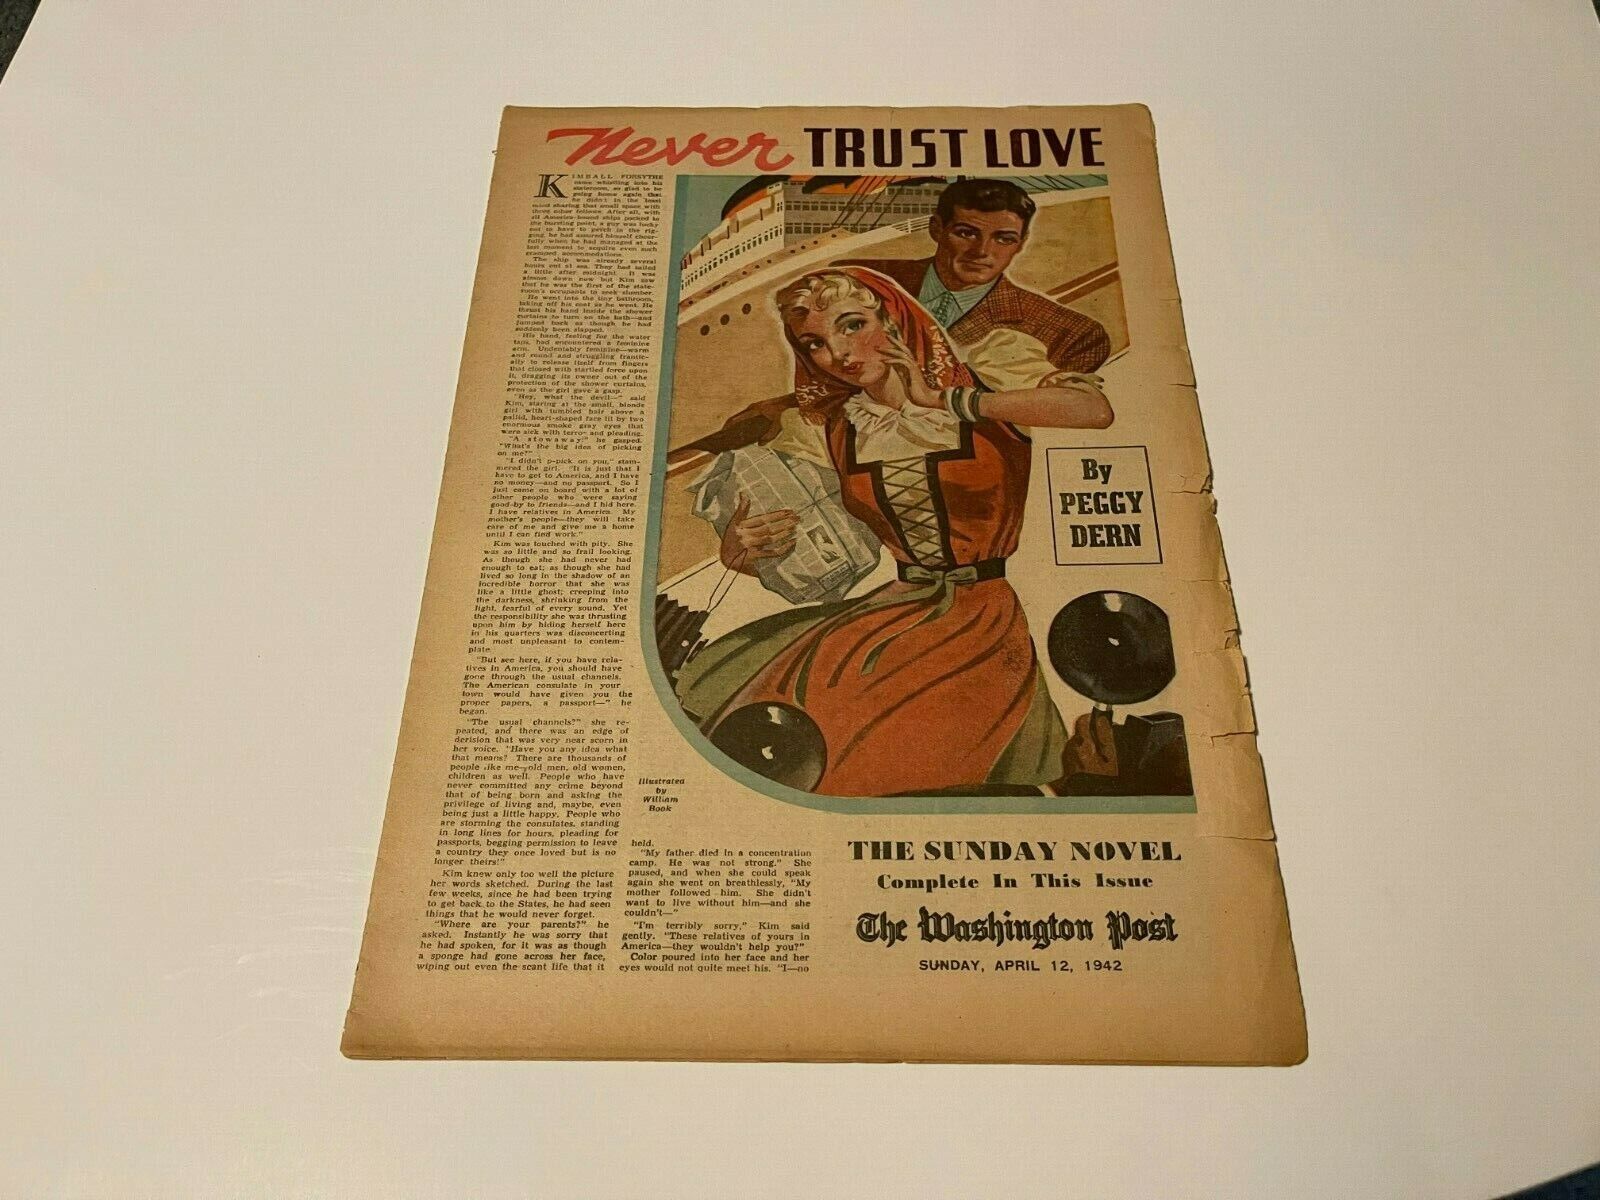 never trust love, 1942 washington post sunday novel, peggy dern, april 12 1942